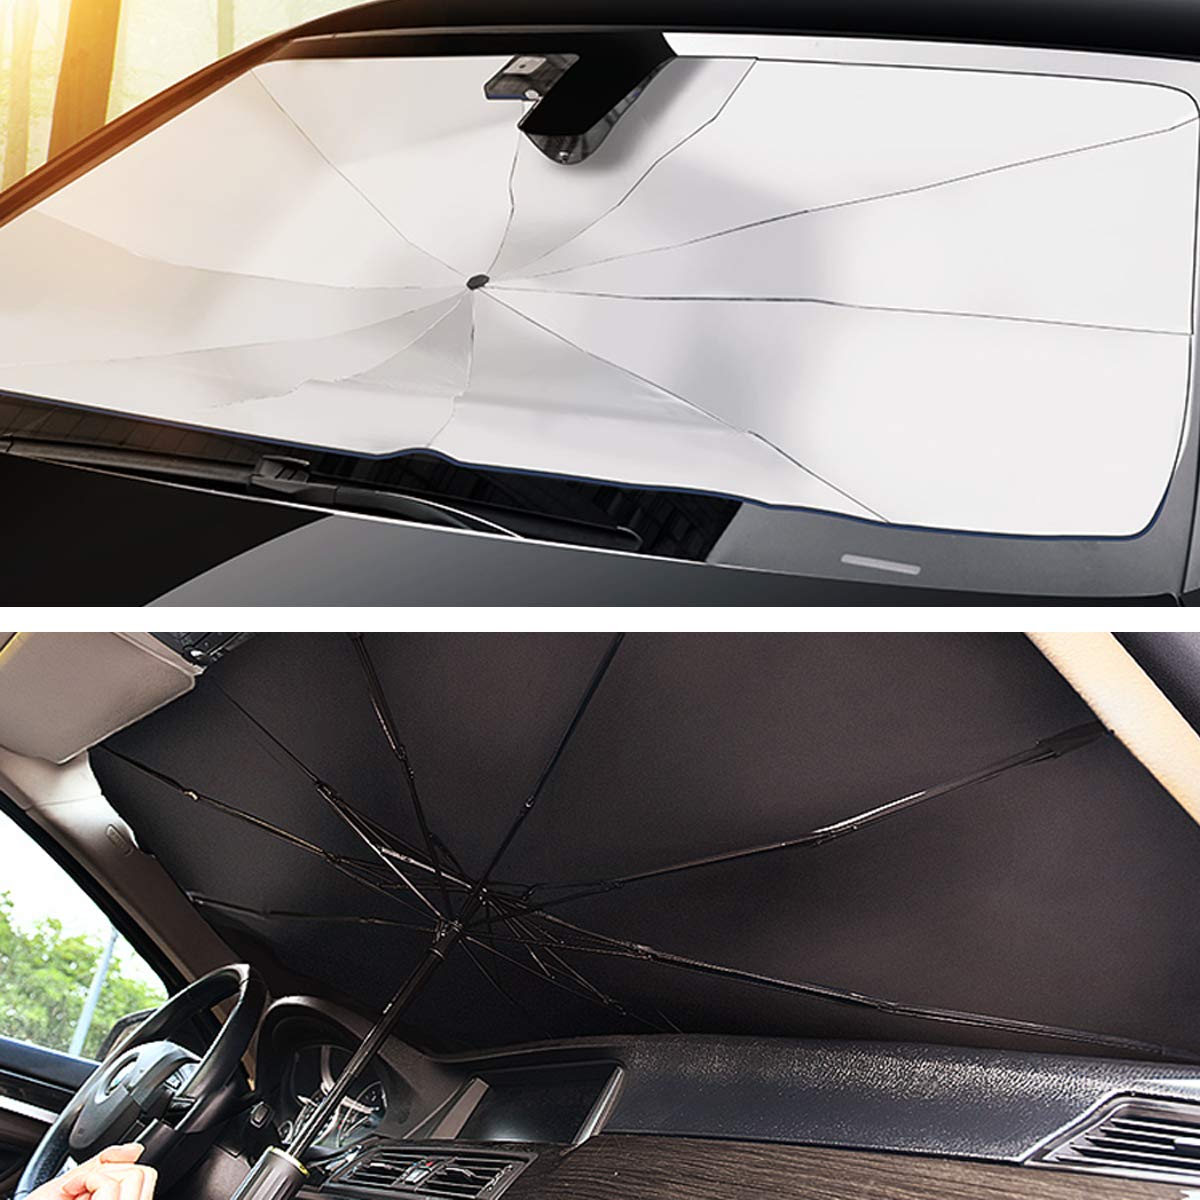 Parasolar tip Umbrela pentru Masina cu Protectie UV, dimensiune 134 x 60 cm